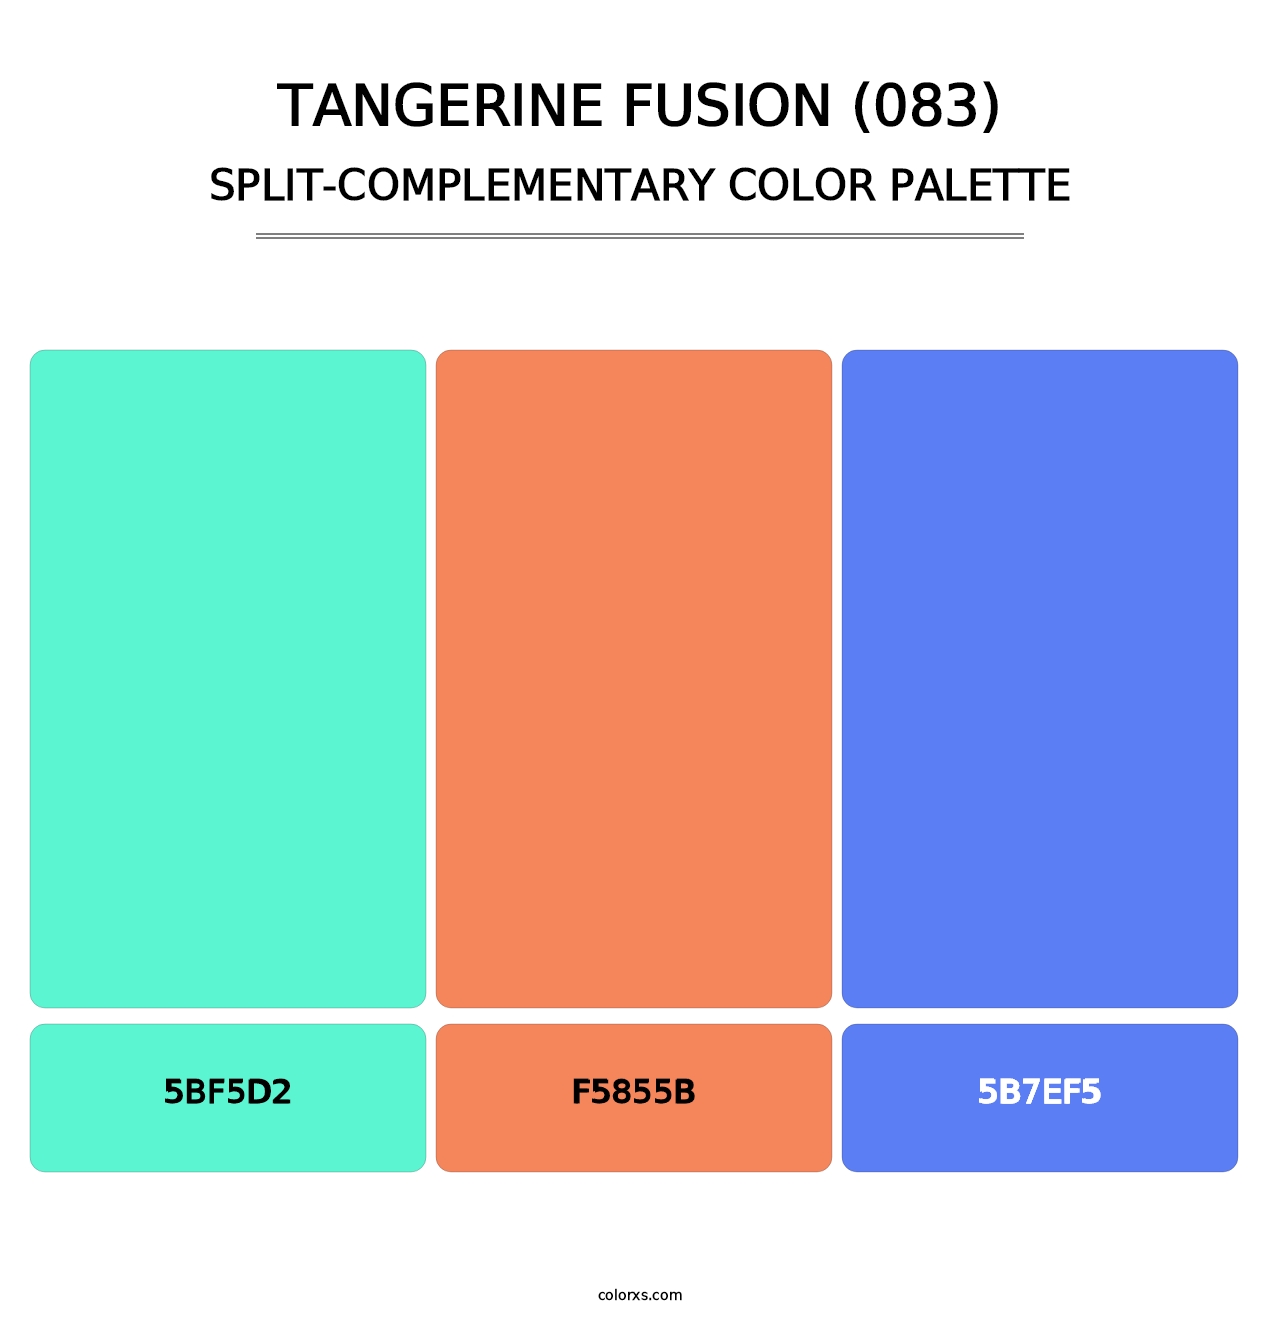 Tangerine Fusion (083) - Split-Complementary Color Palette